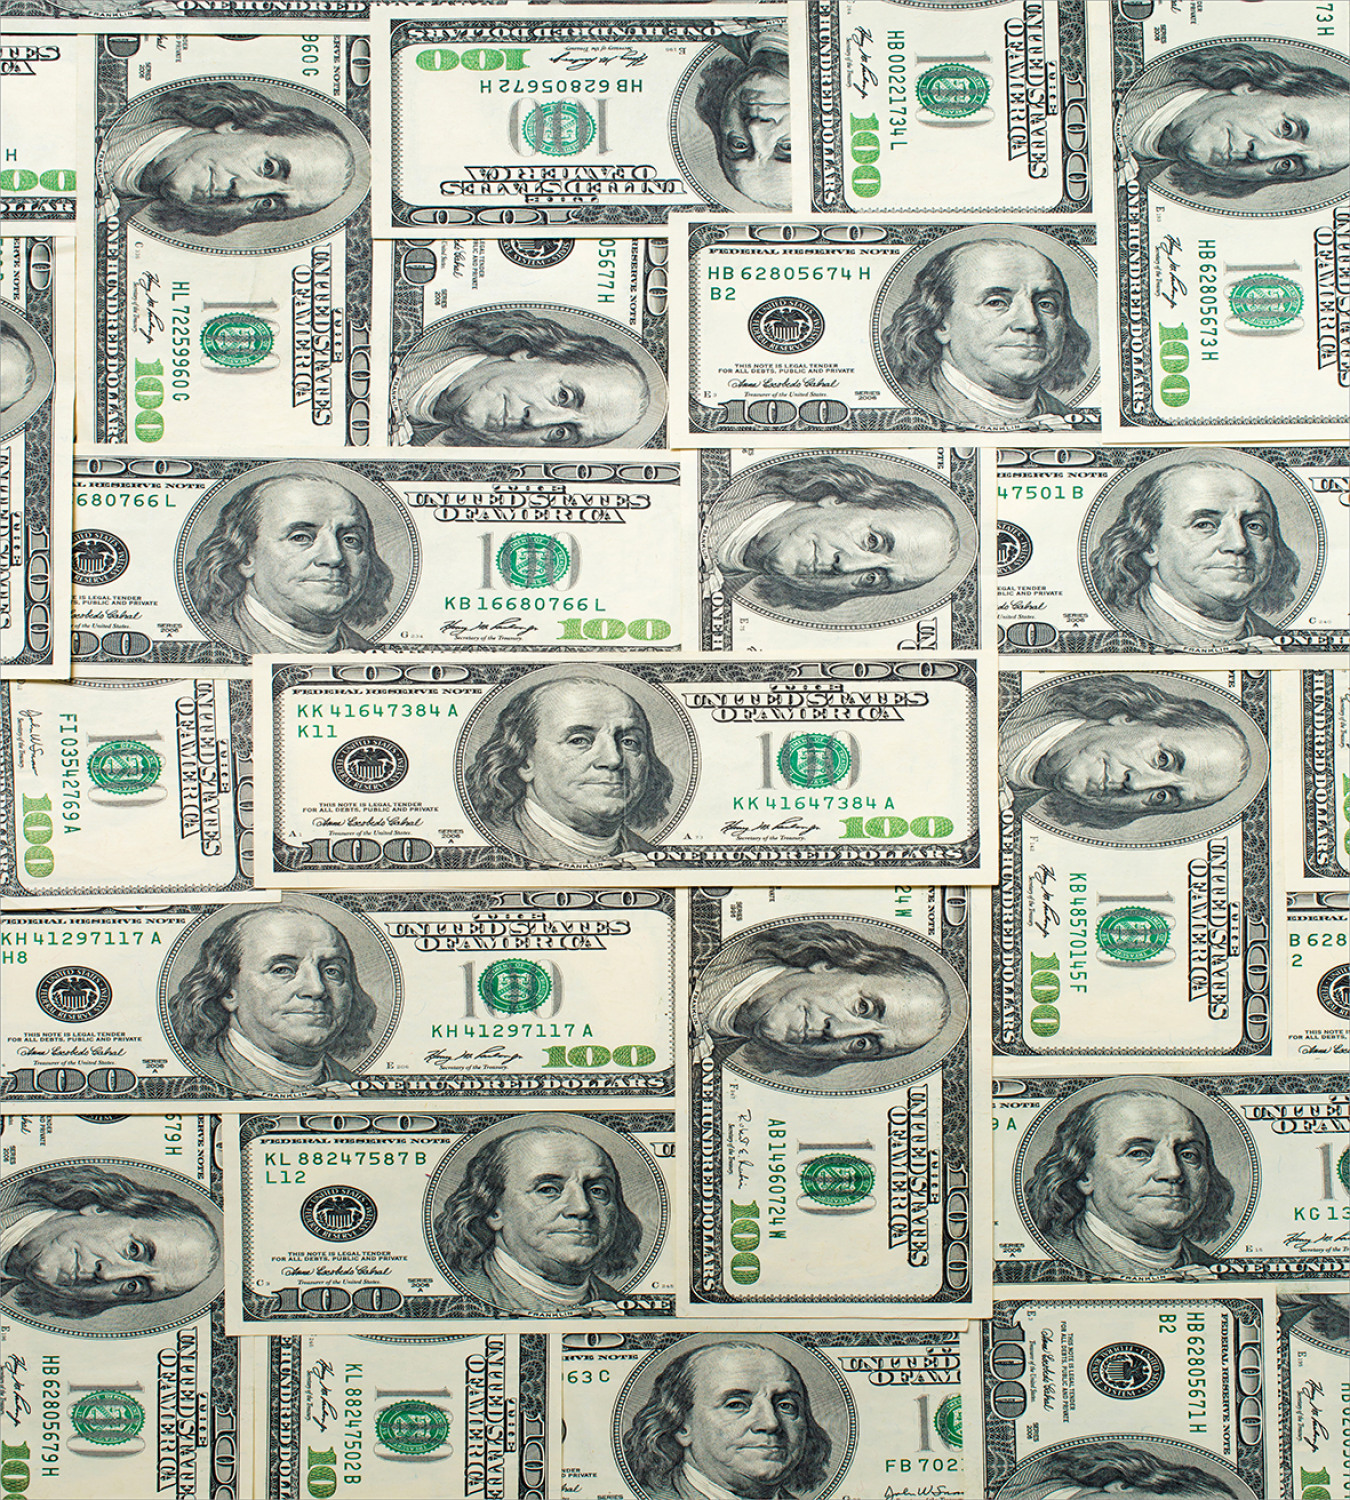 Money Duvet Cover Set with Pillow Shams Bills with Ben Franklin Print 